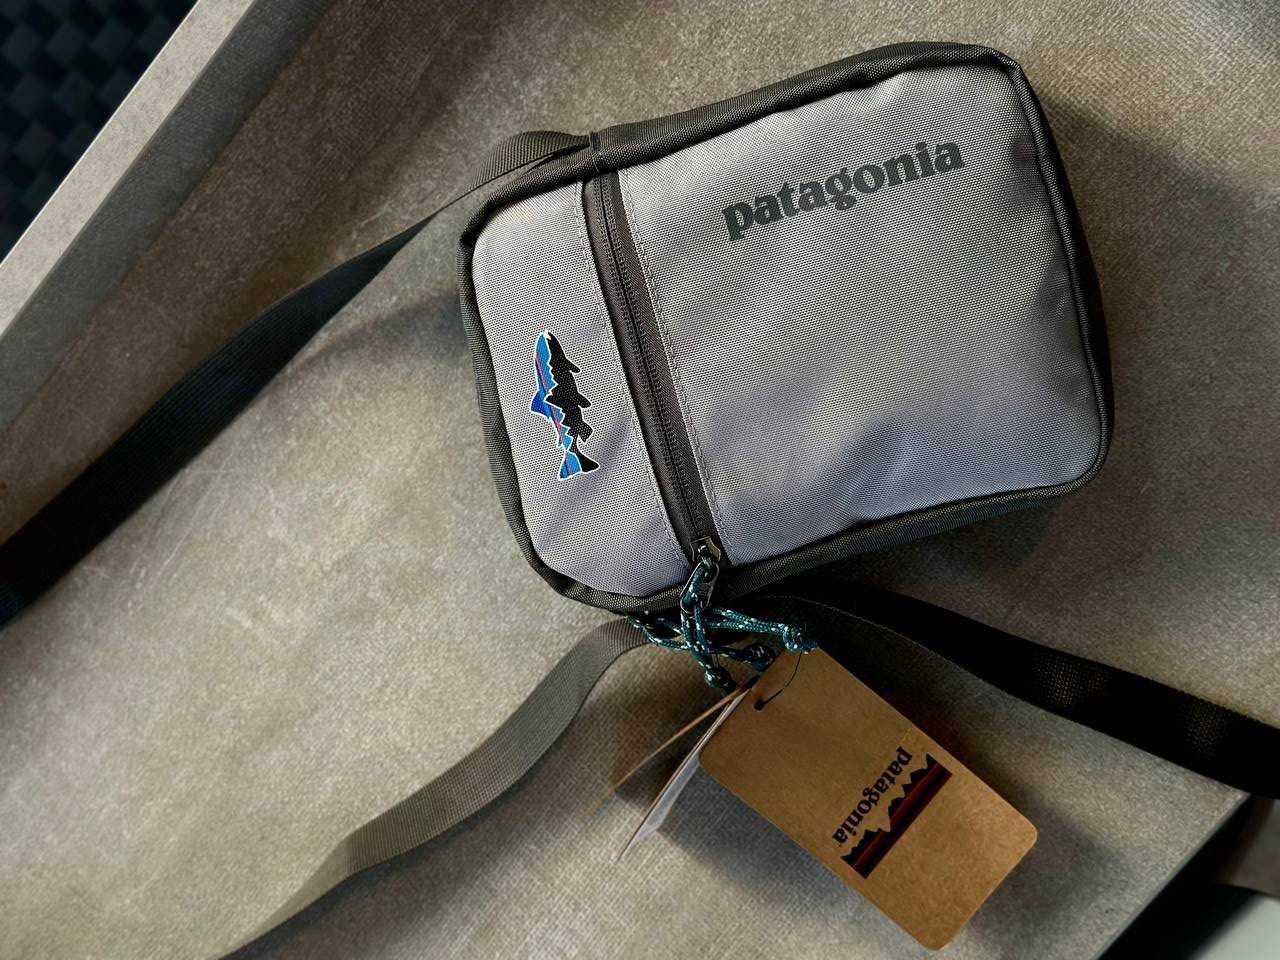 Сумка Patagonia з бірками, барсетка через плече Патагонія, месенджер